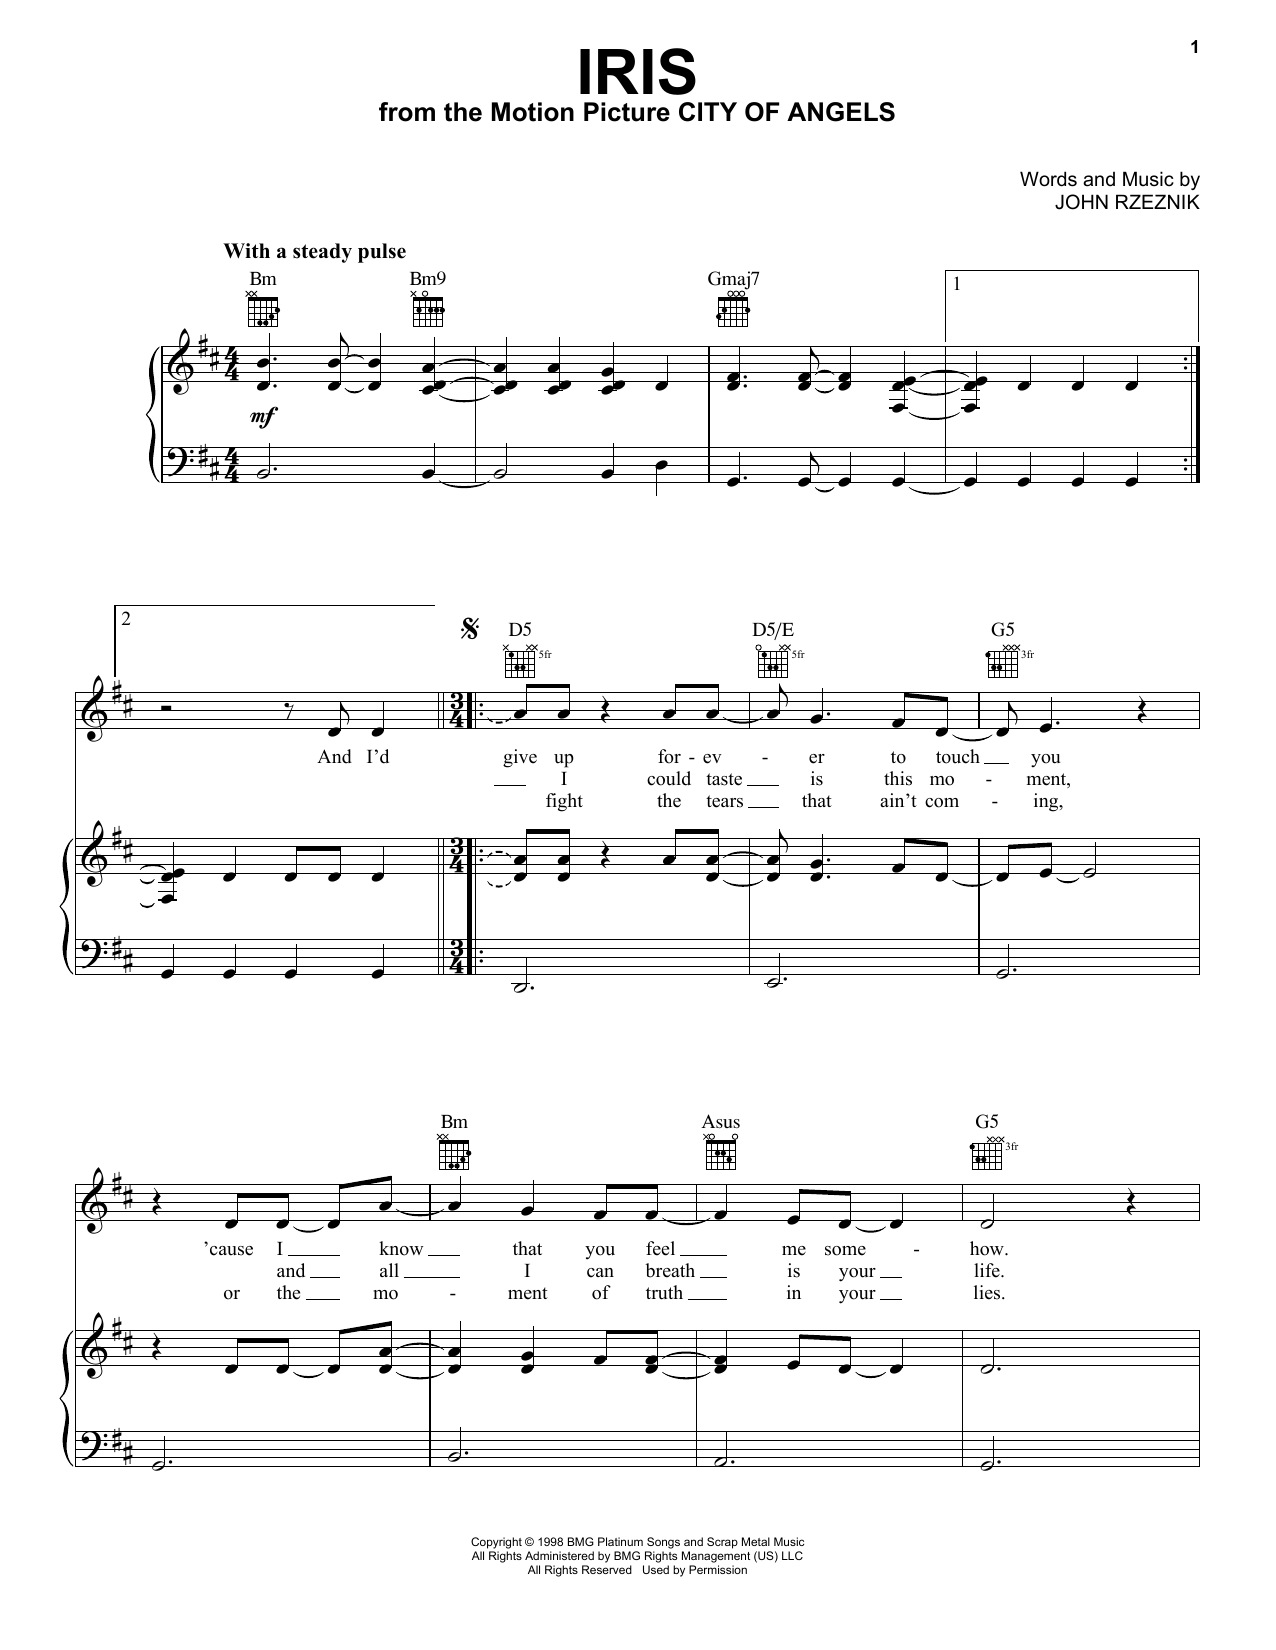 Goo Goo Dolls Iris Sheet Music Notes & Chords for Guitar Lead Sheet - Download or Print PDF